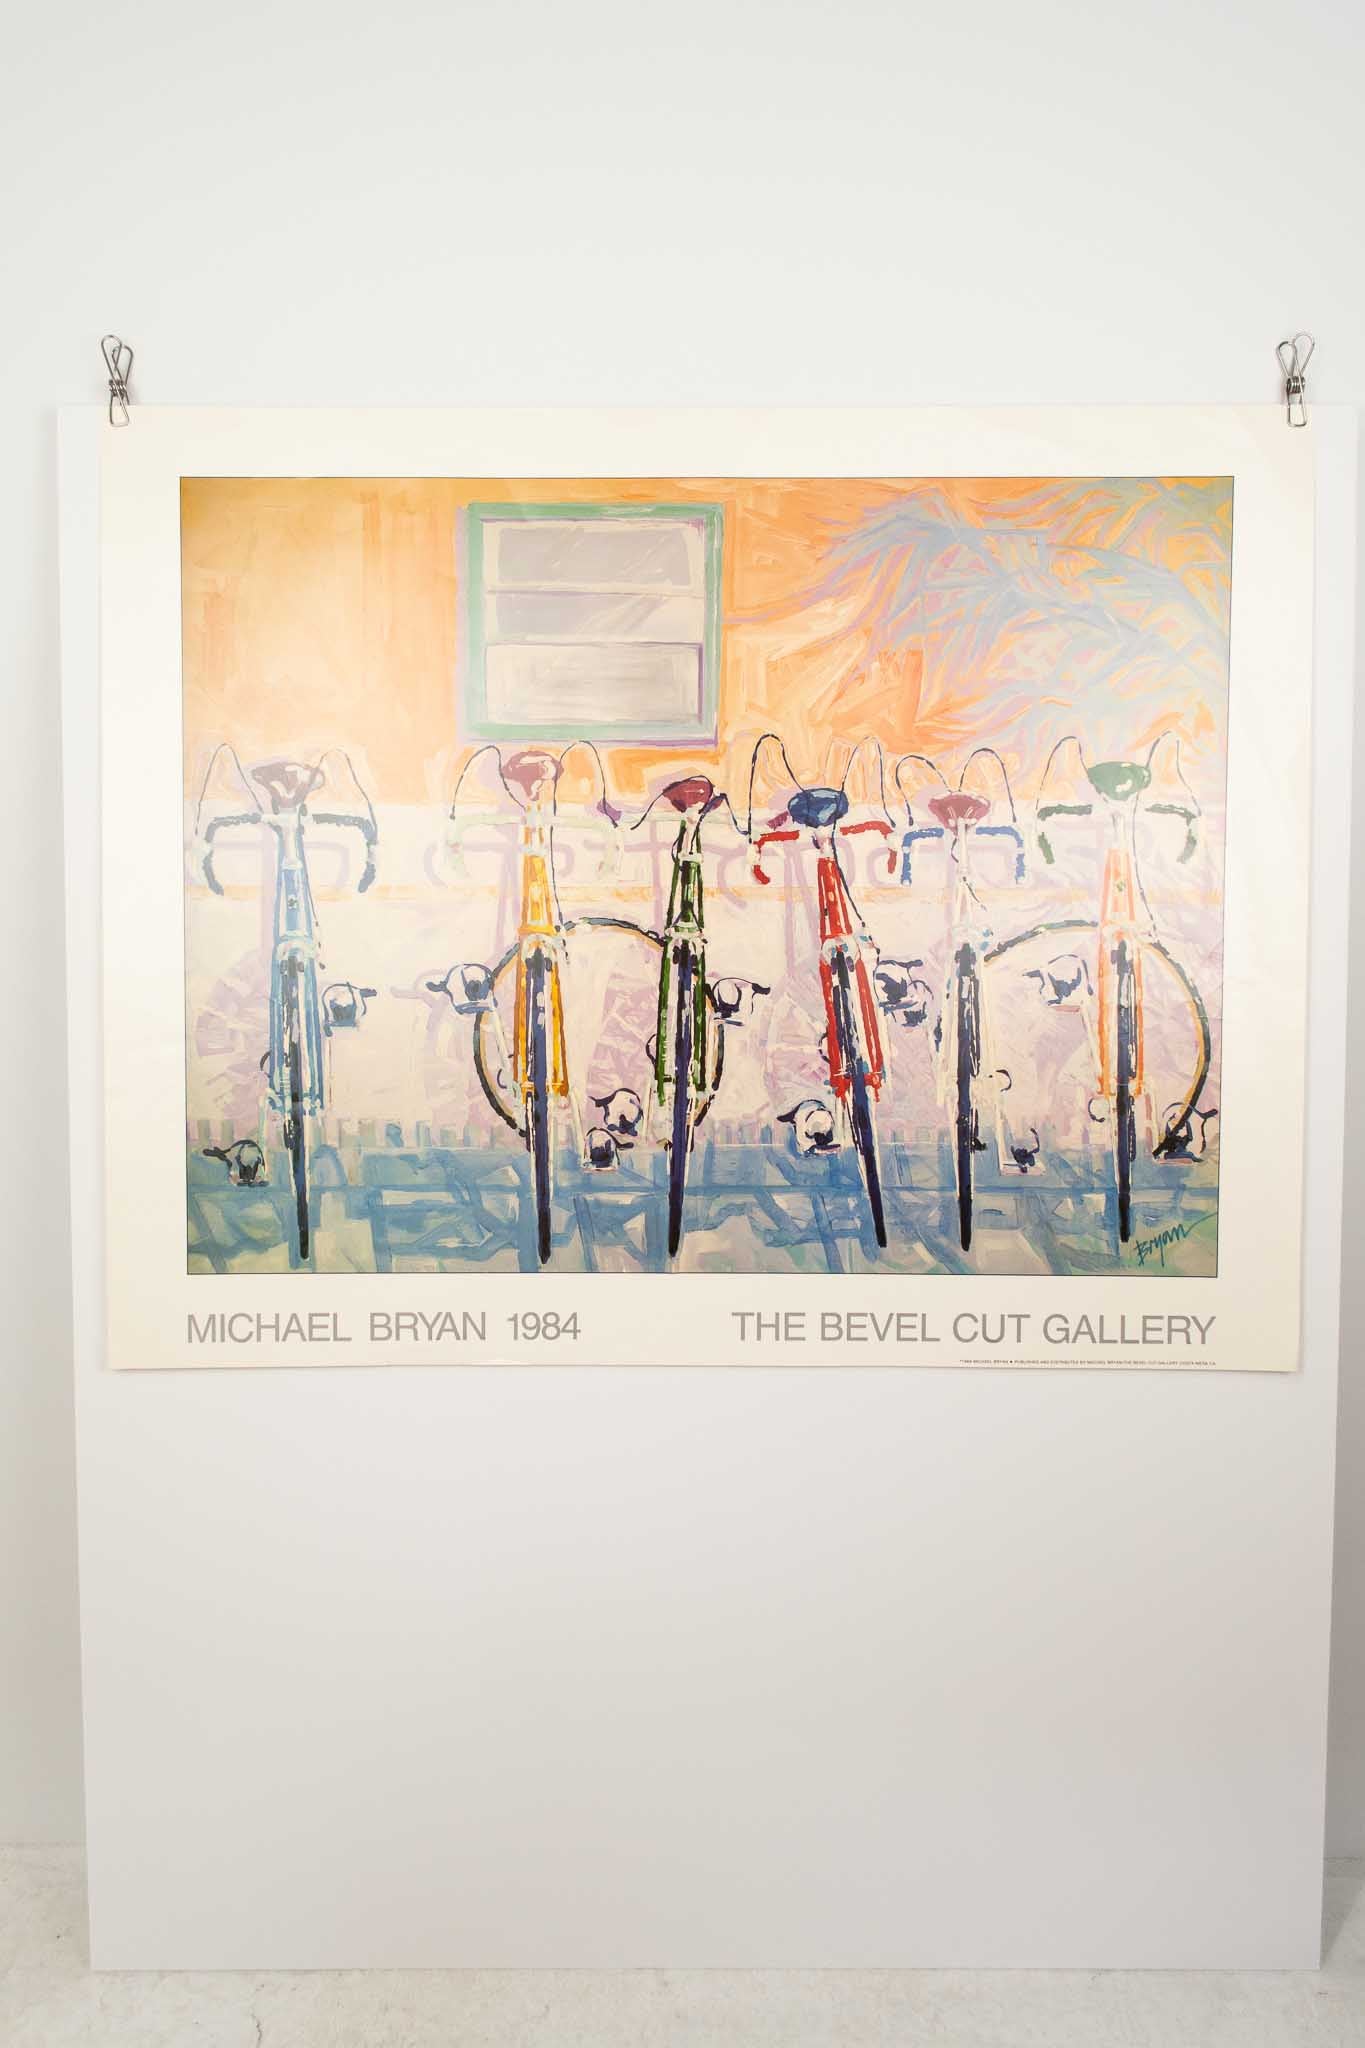 Michael Bryan 1984 "The Bevel Cut Gallery" Print